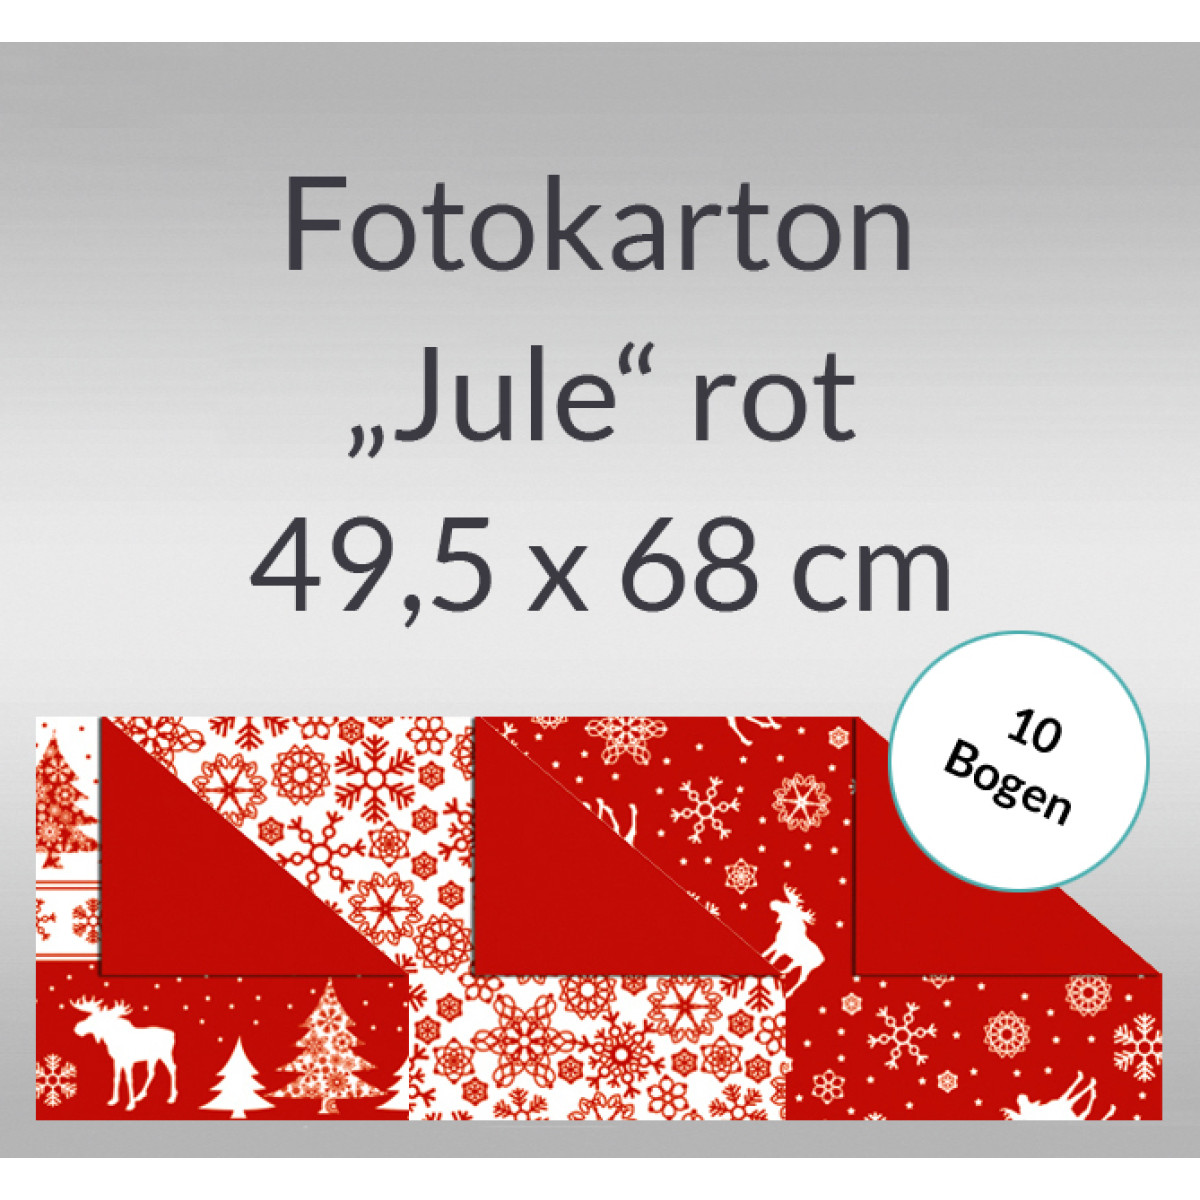 Fotokarton "Jule" rot 49,5 x 68 cm - 10 Bogen